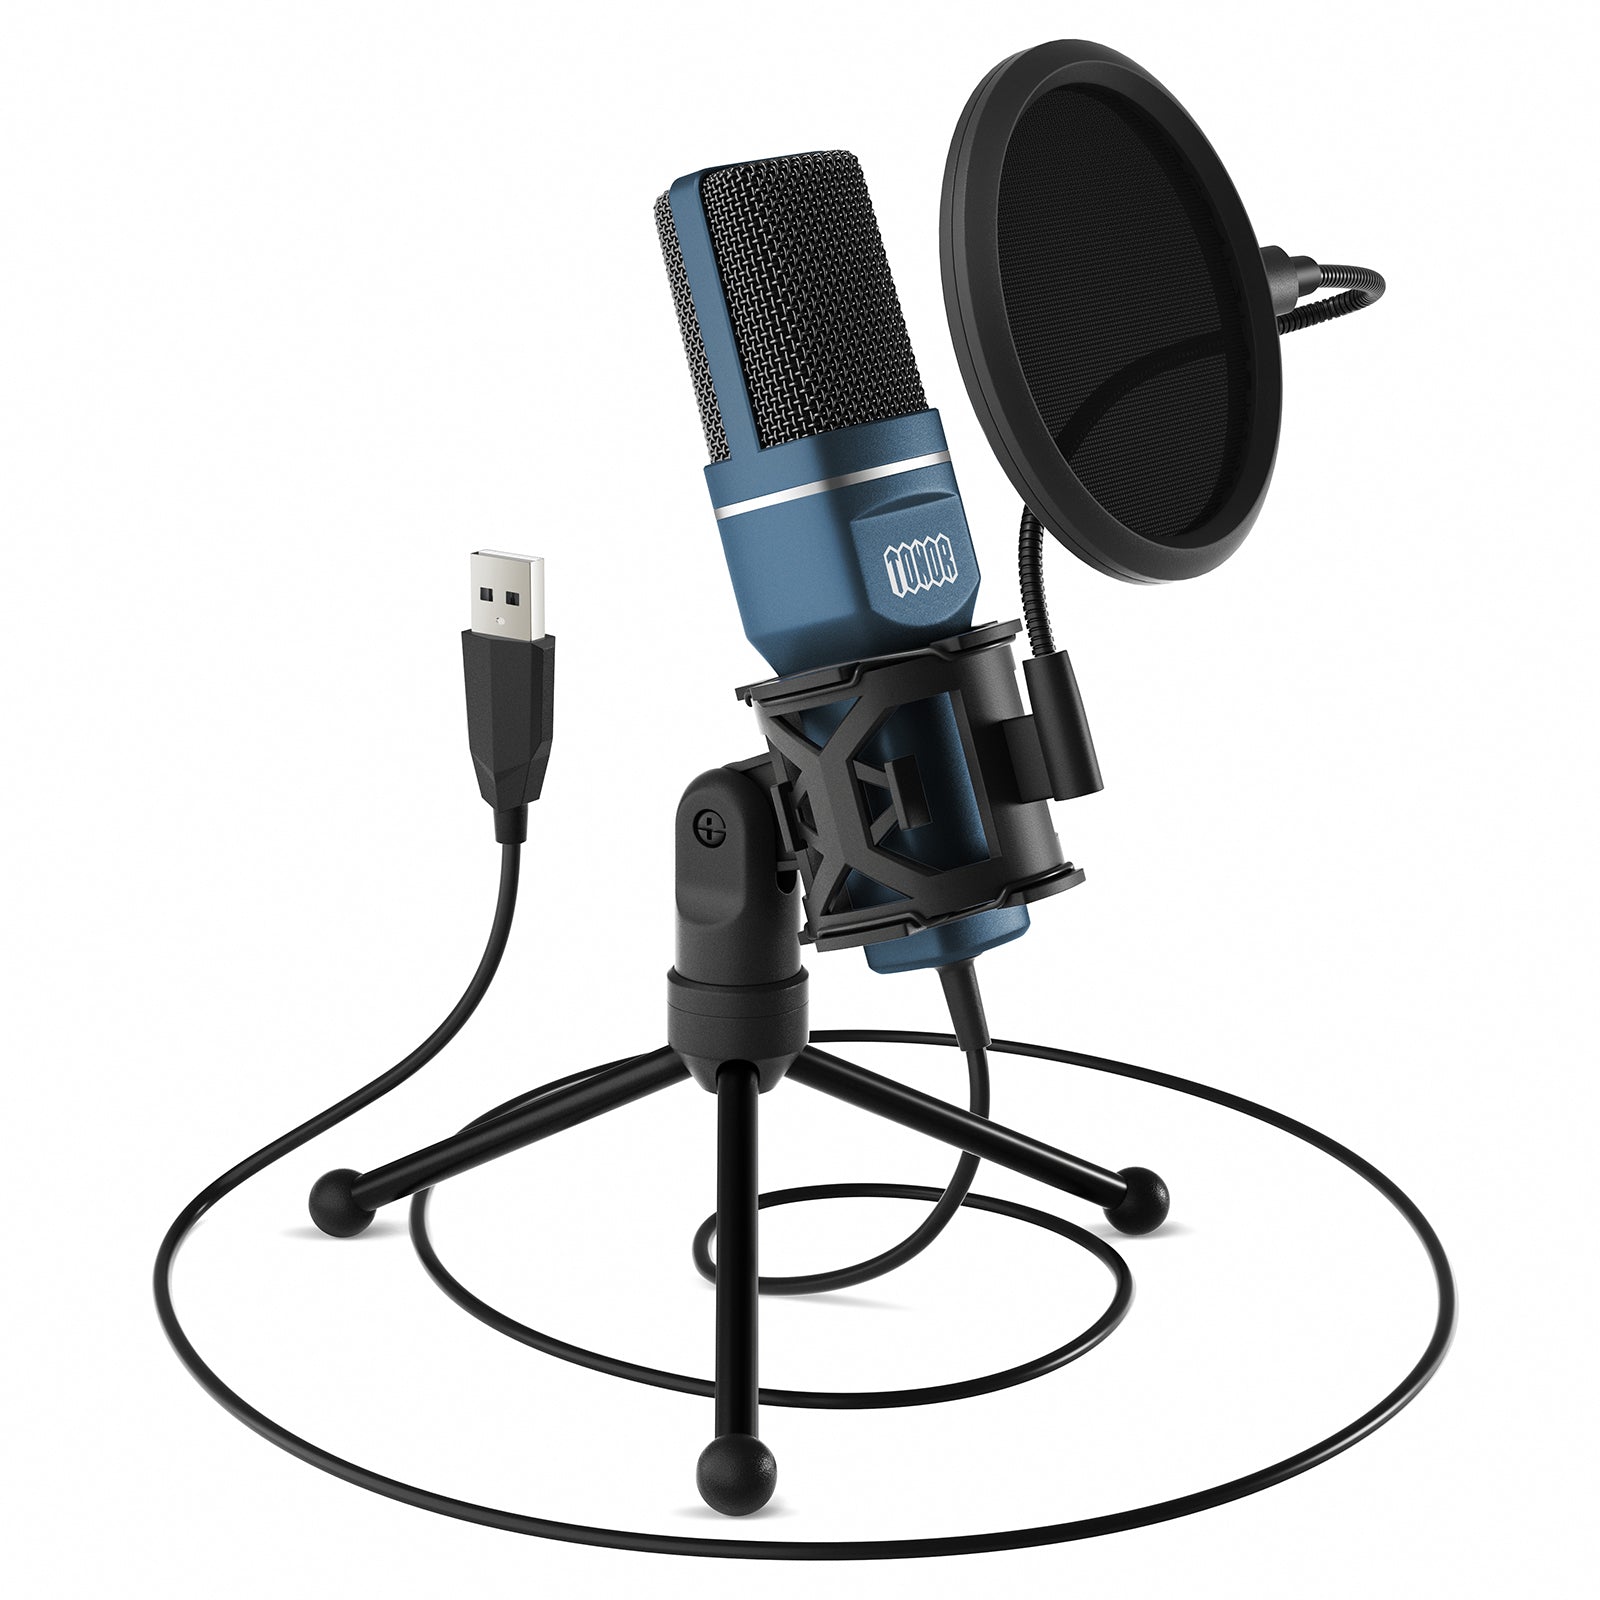 XLR vs USB Microphones for Streaming in 2021